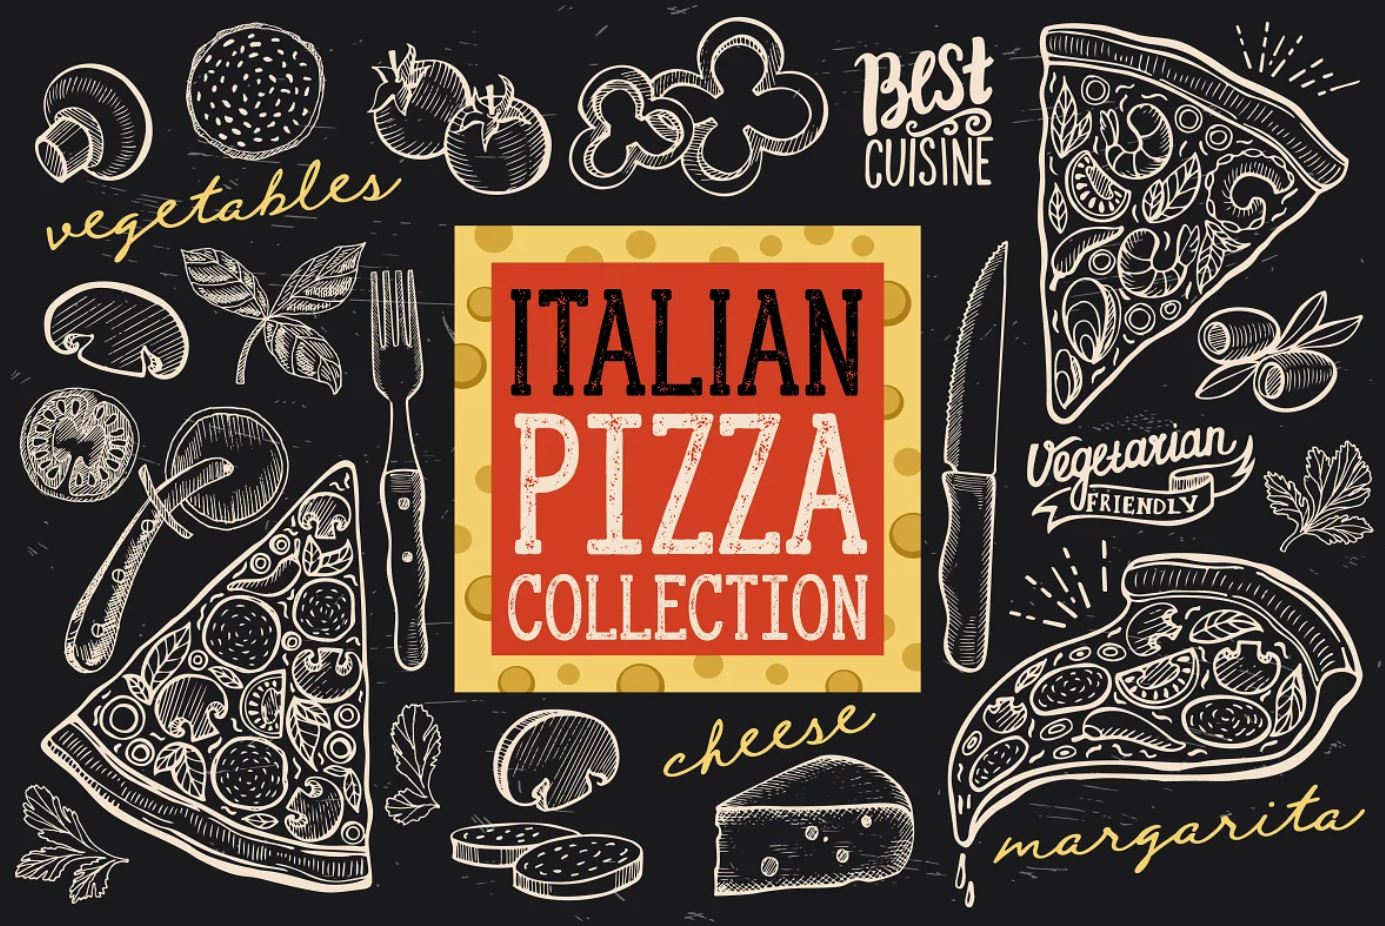 Italian food top view Italian cuisine menu design Vintage hand drawn  sketch vector illustration  Stock Image  Everypixel